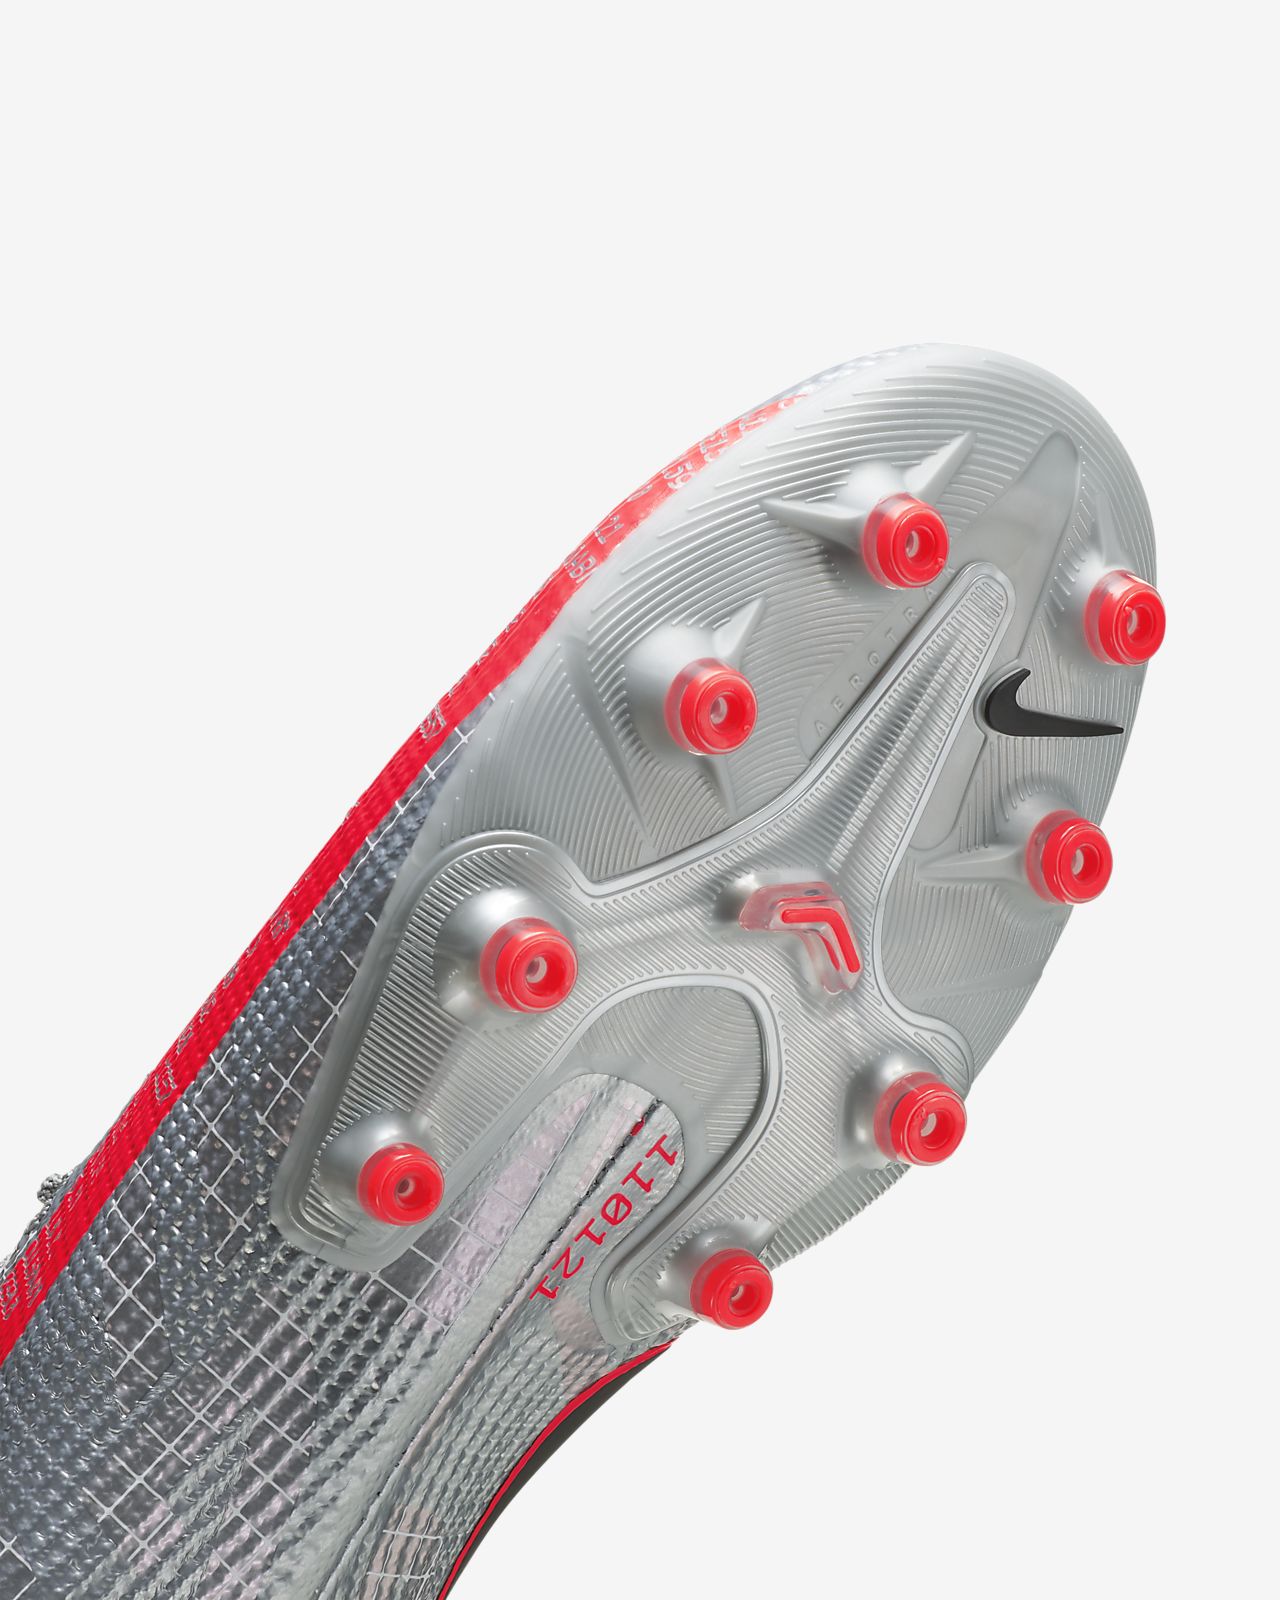 Nike Mercurial Vapor 13 Pro Under the Radar Pack Review.